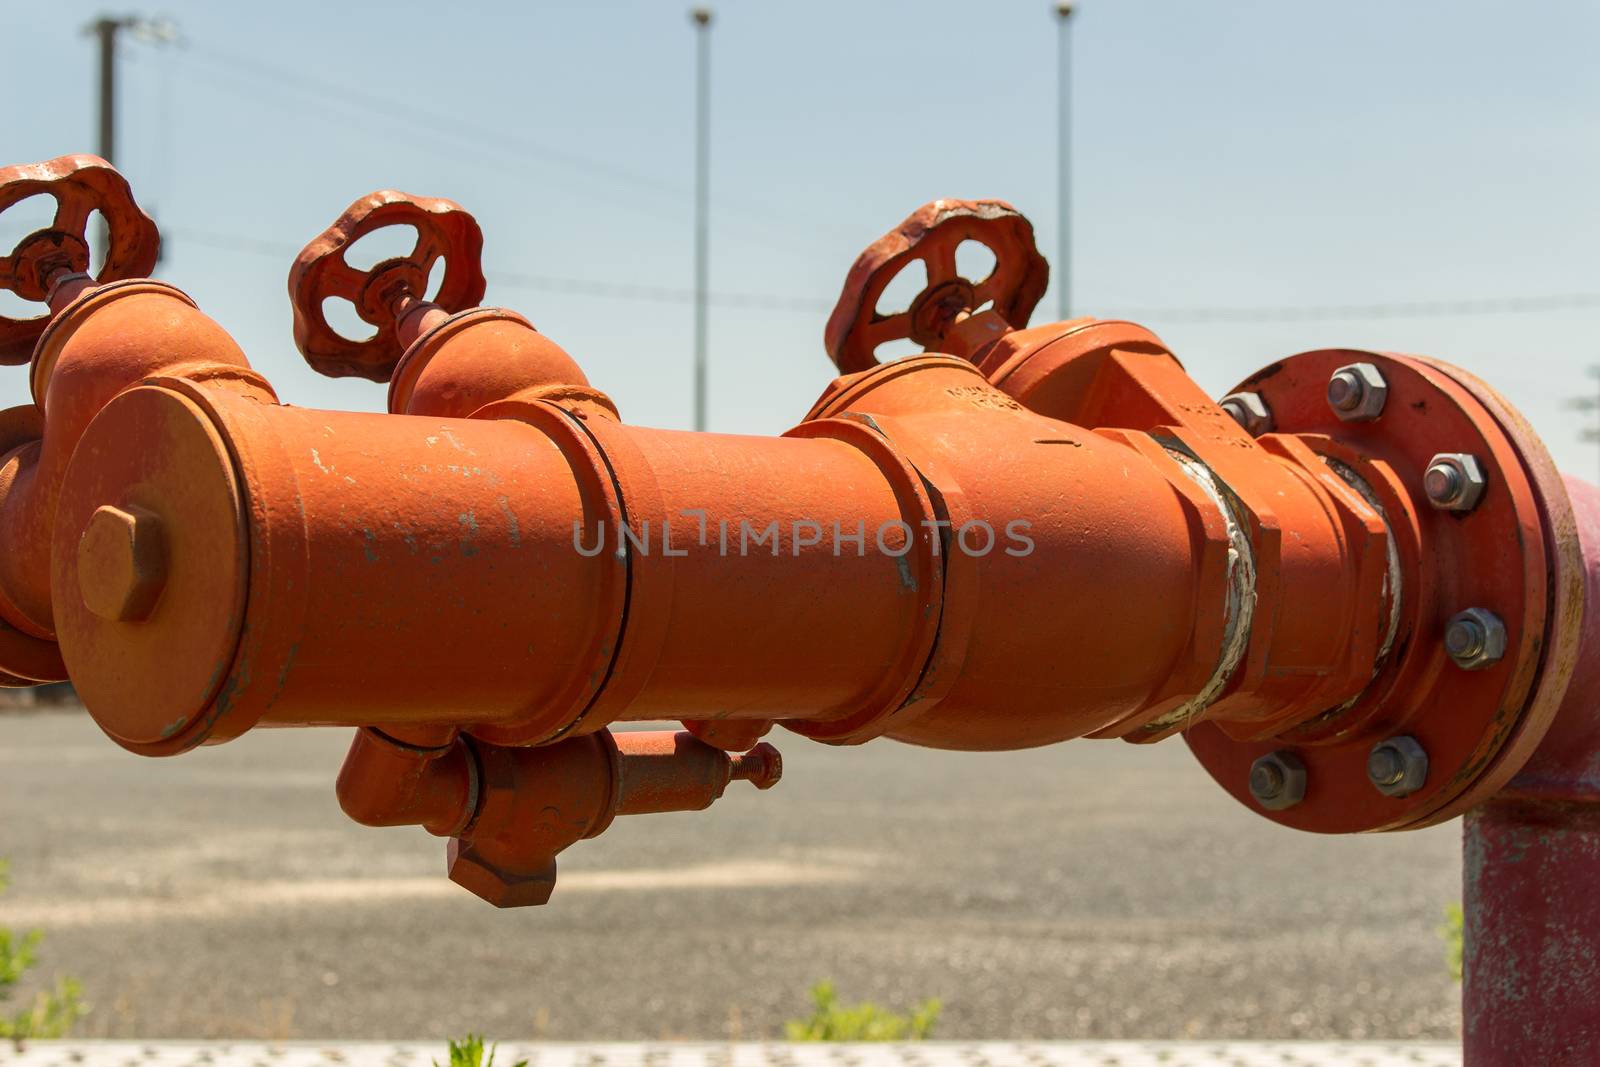 fire hydrants by alanstix64